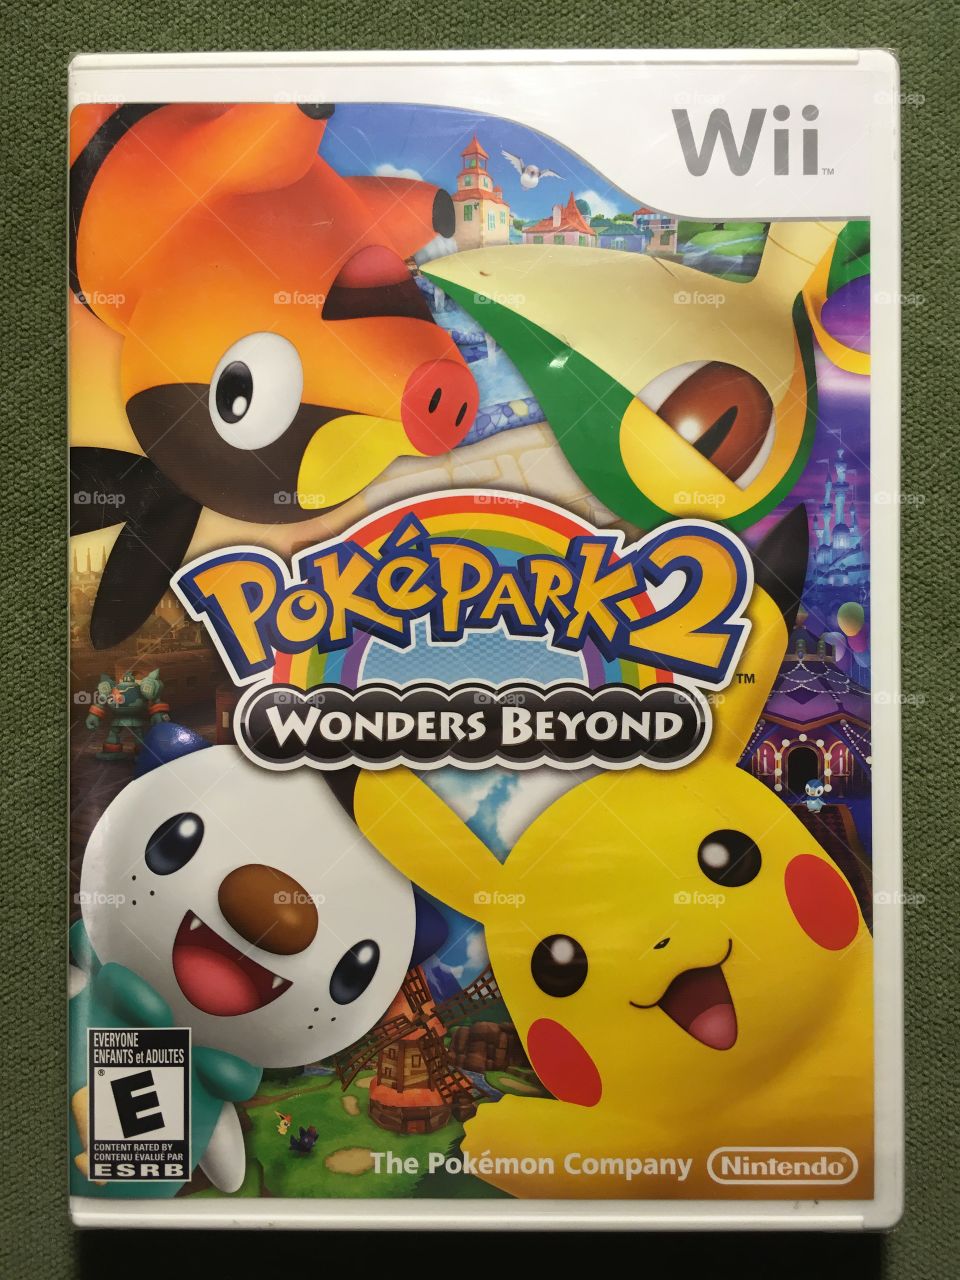 Pokepark 2 wonders beyond 
Video game for Nintendo wii
Brand new sealed 
Released - 2012